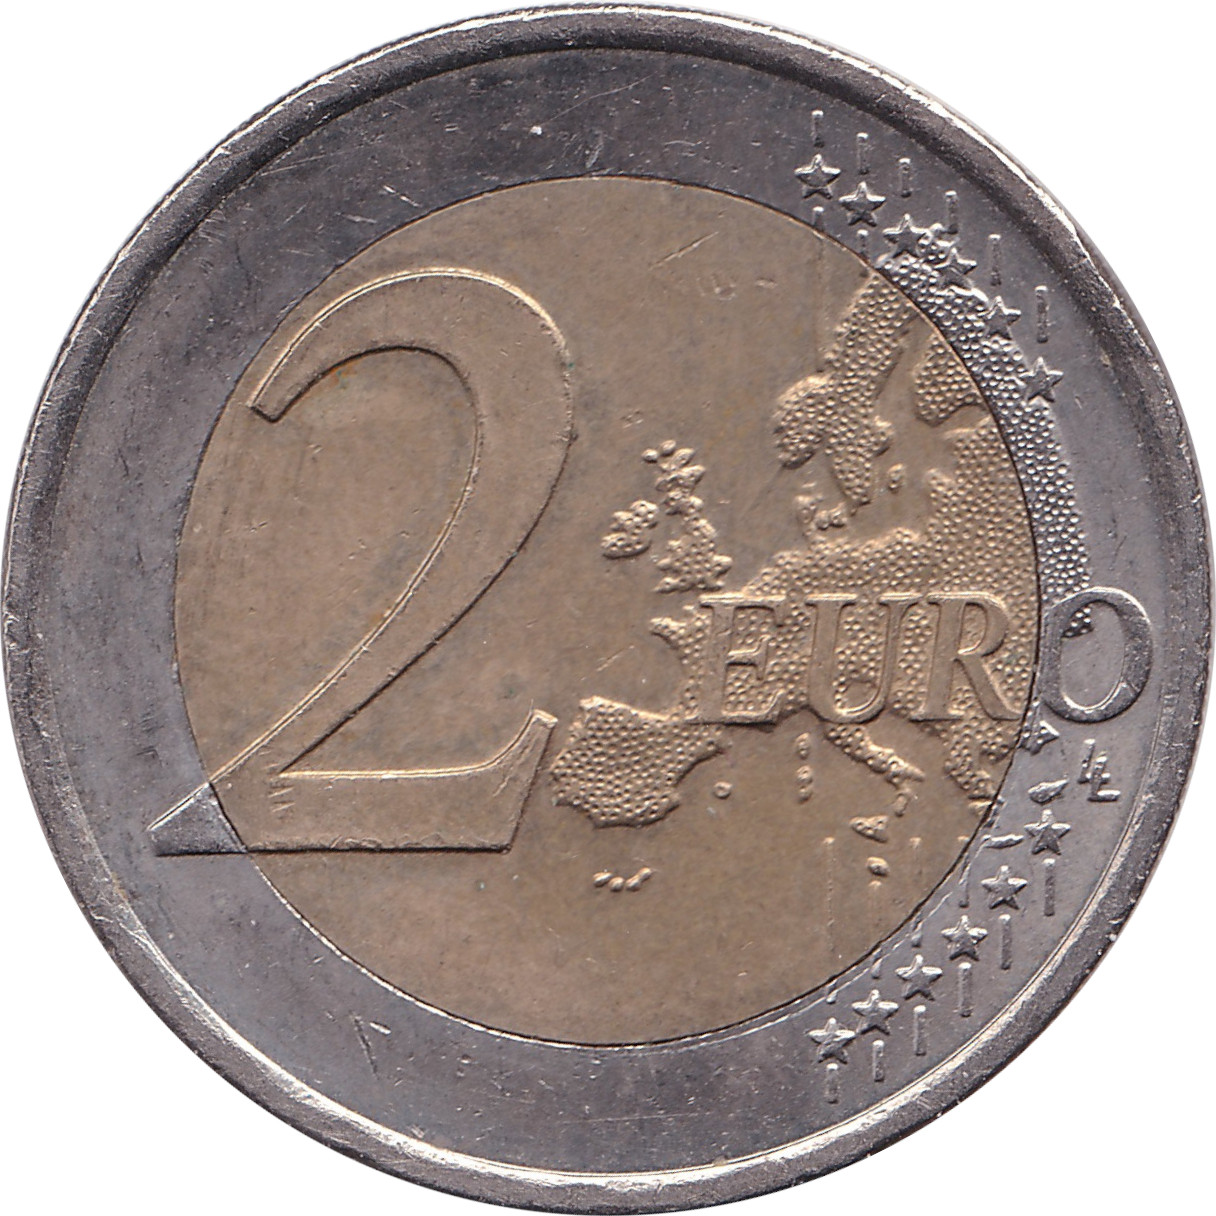 2 euro - Treaty of Rome - 50 years